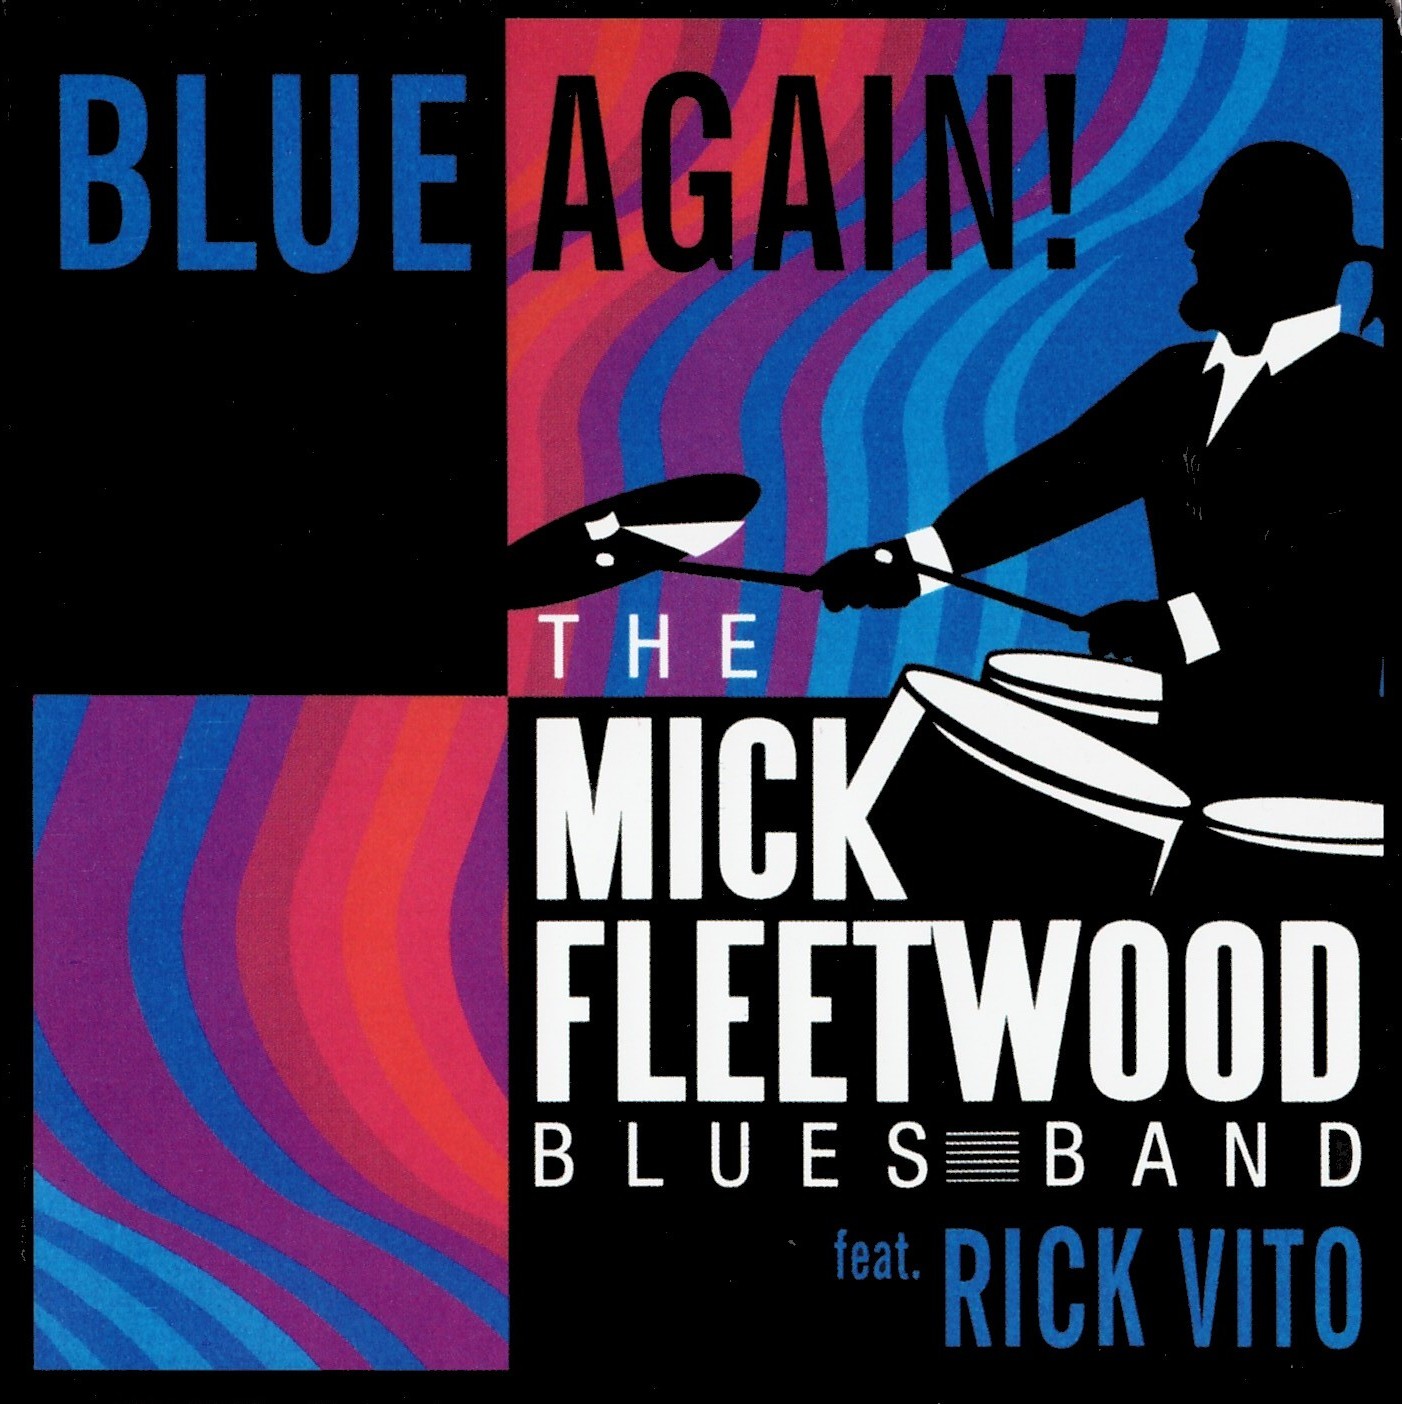 Mick Fleetwood Blues Band Ft. Rick Vito - Blue Again - 2008 ( flac en MP3 ) + Live 2016 ( MP3 )